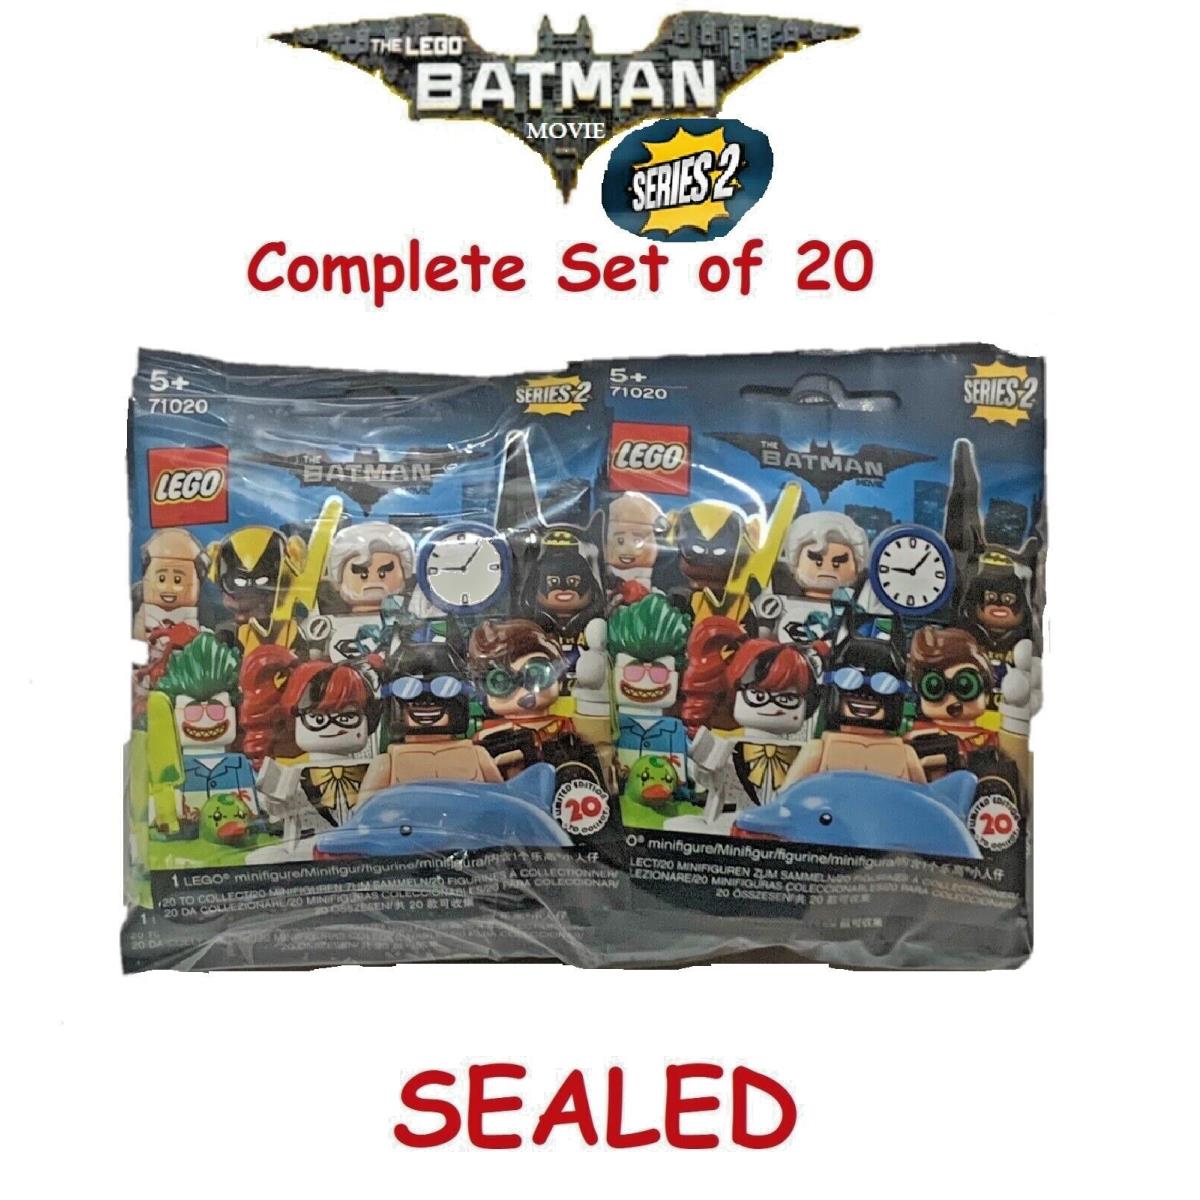 The Lego Batman Movie Minifigures Series 2 71020 - Complete Set of 20